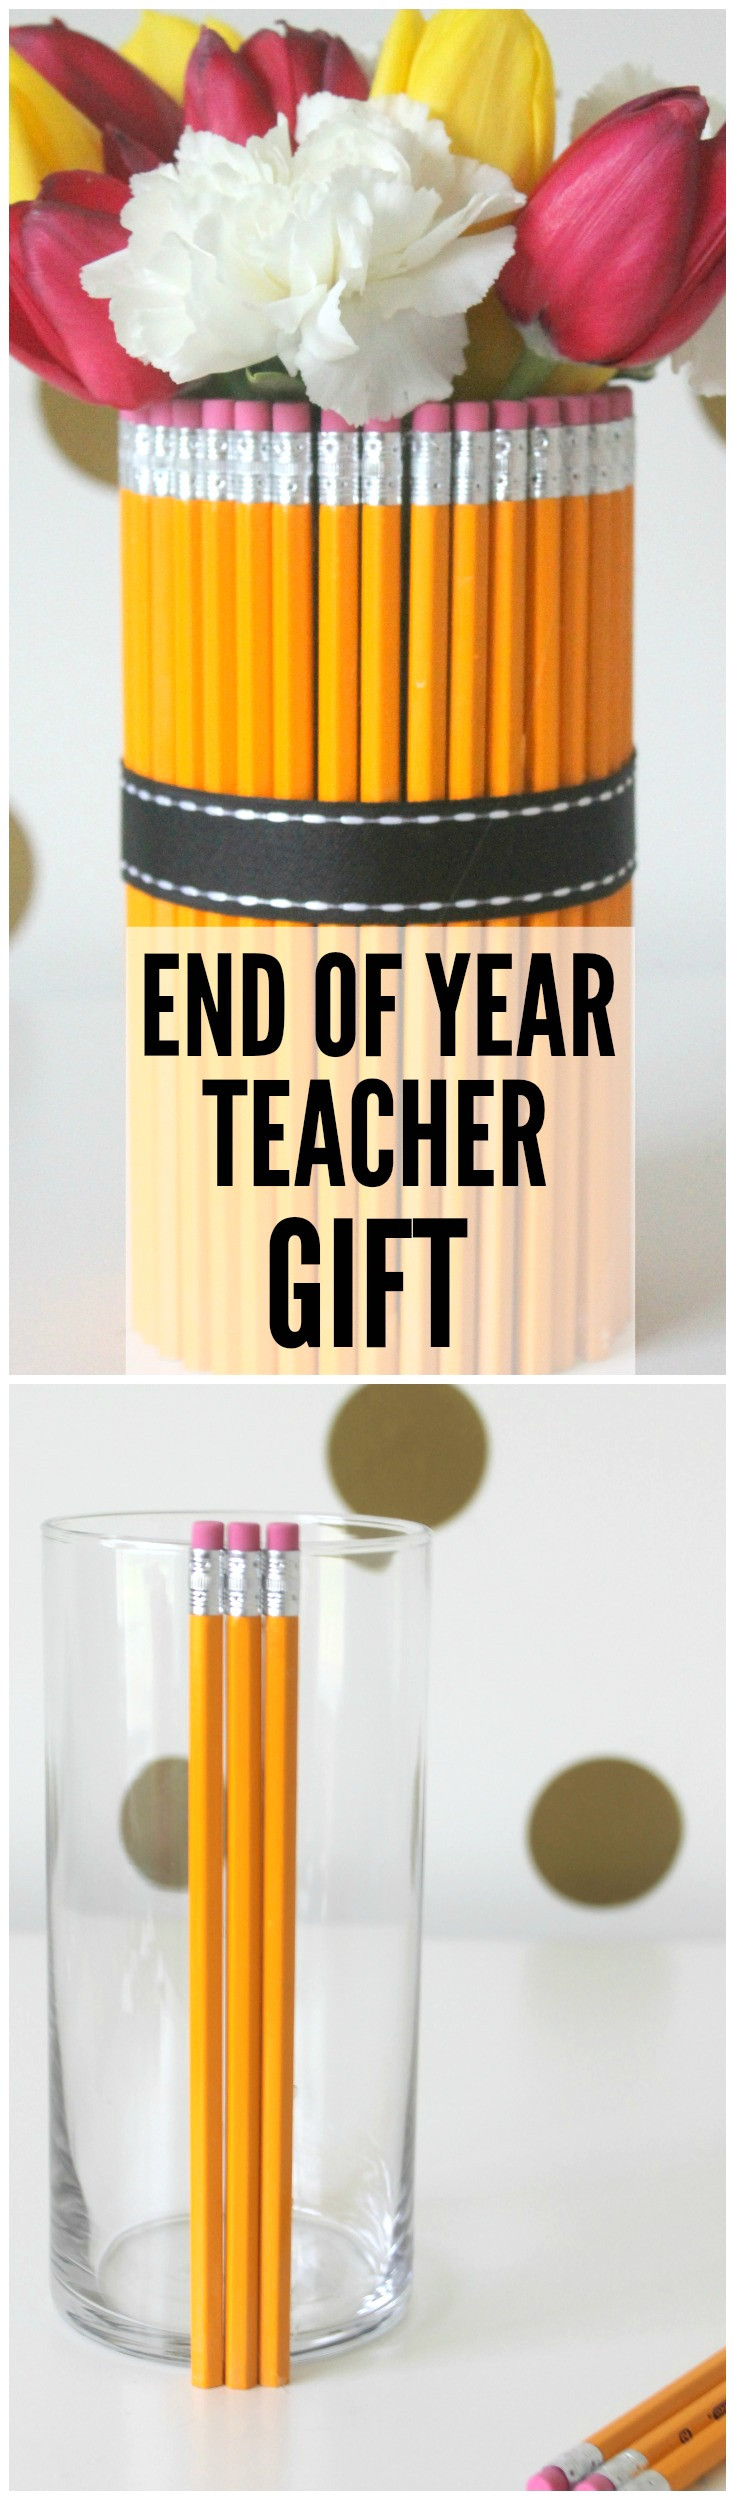 DIY Teacher Gifts End Of Year
 Pencil Vase DIY End of School Teacher Gift